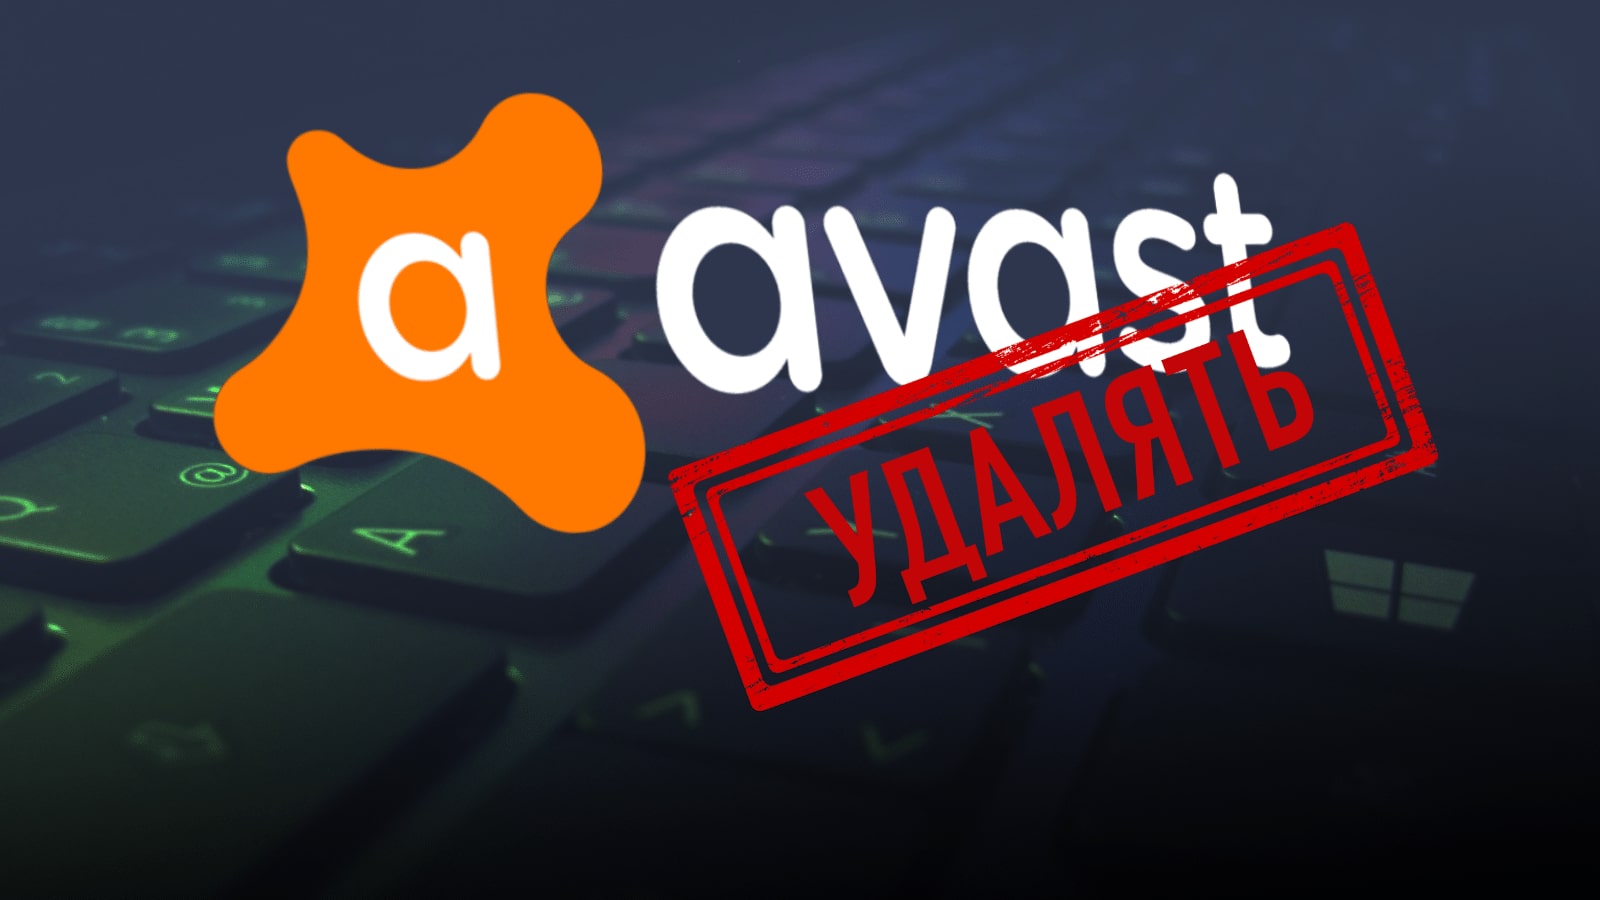 Как удалить Avast